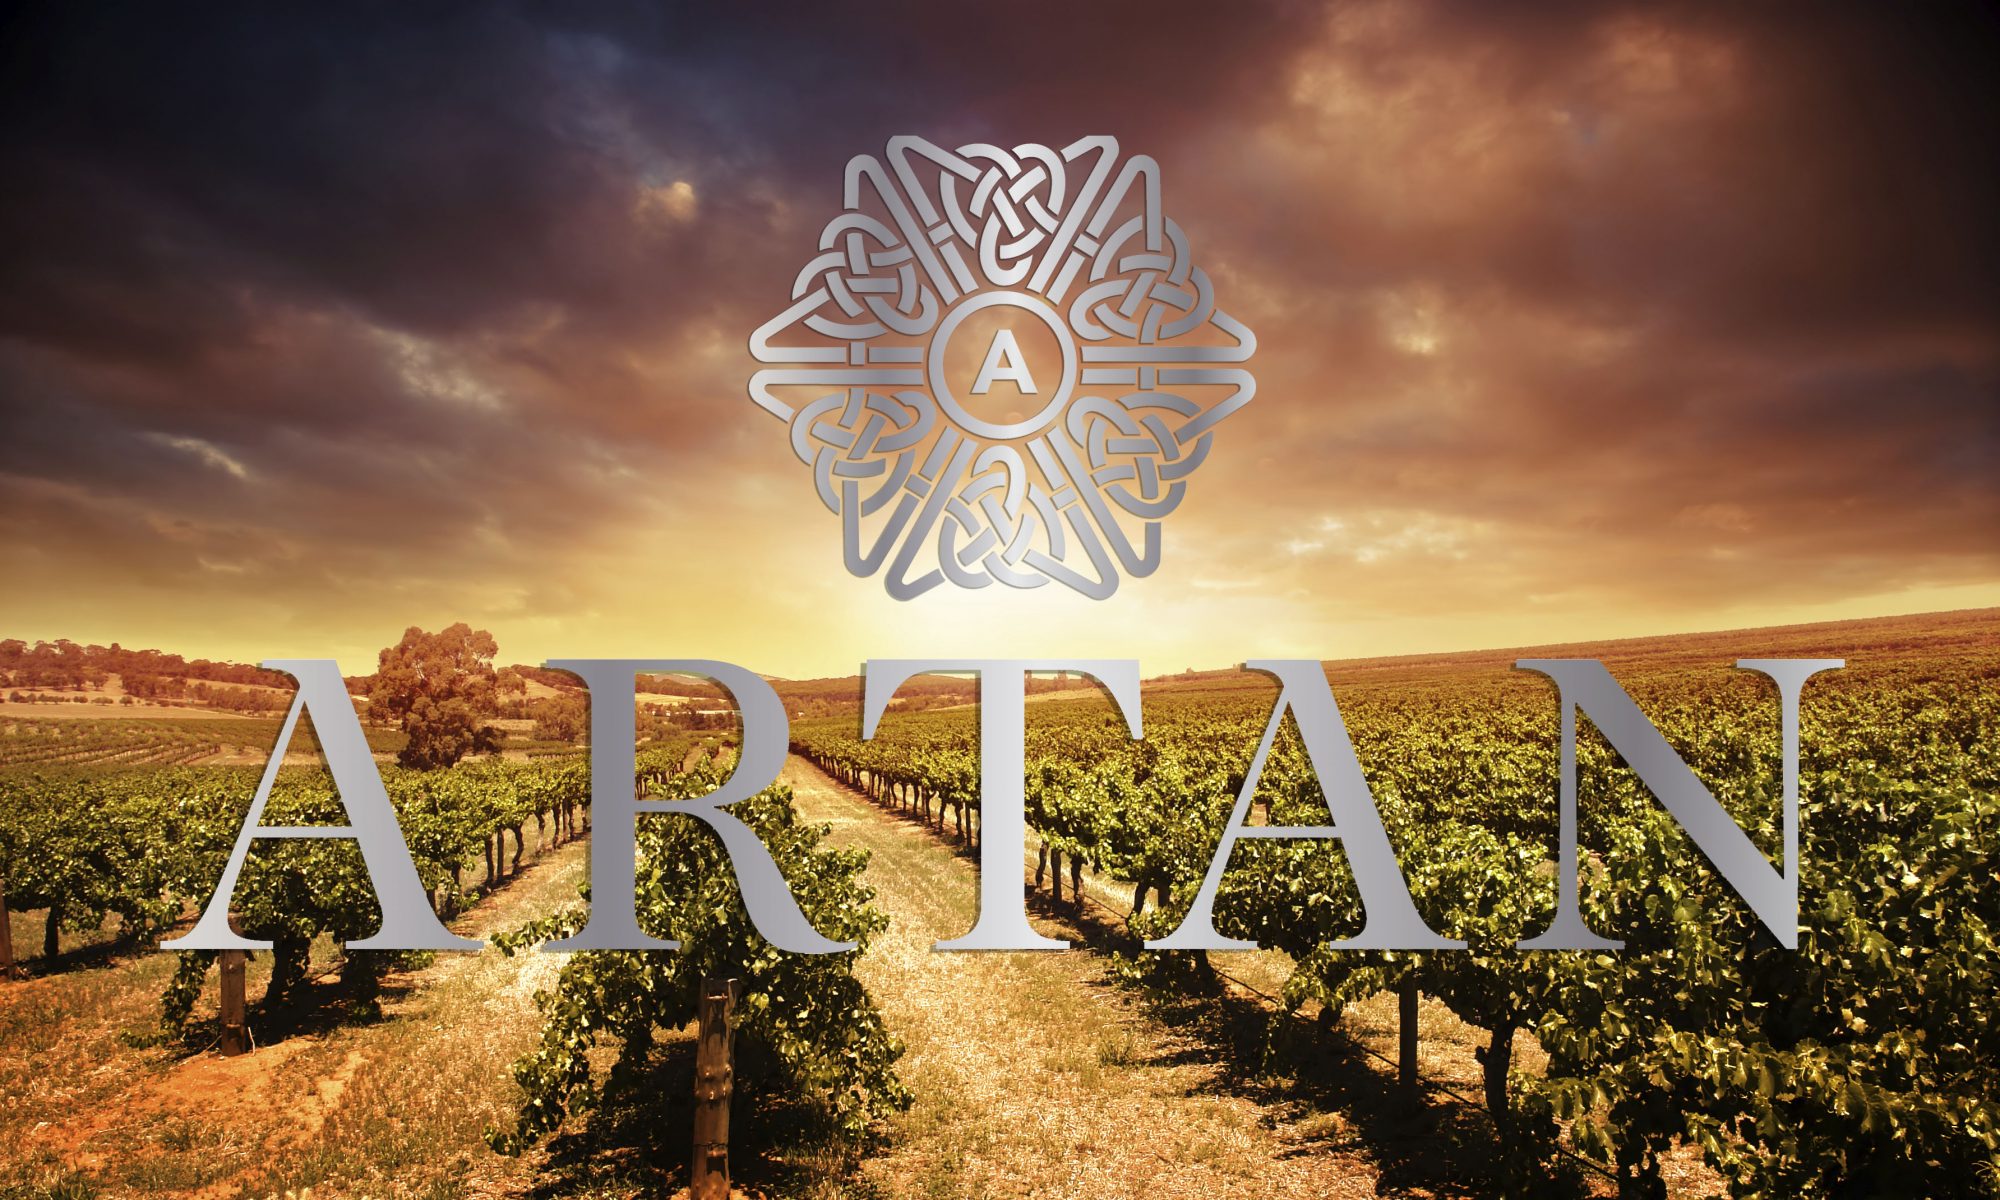 Artan Reserve Wines